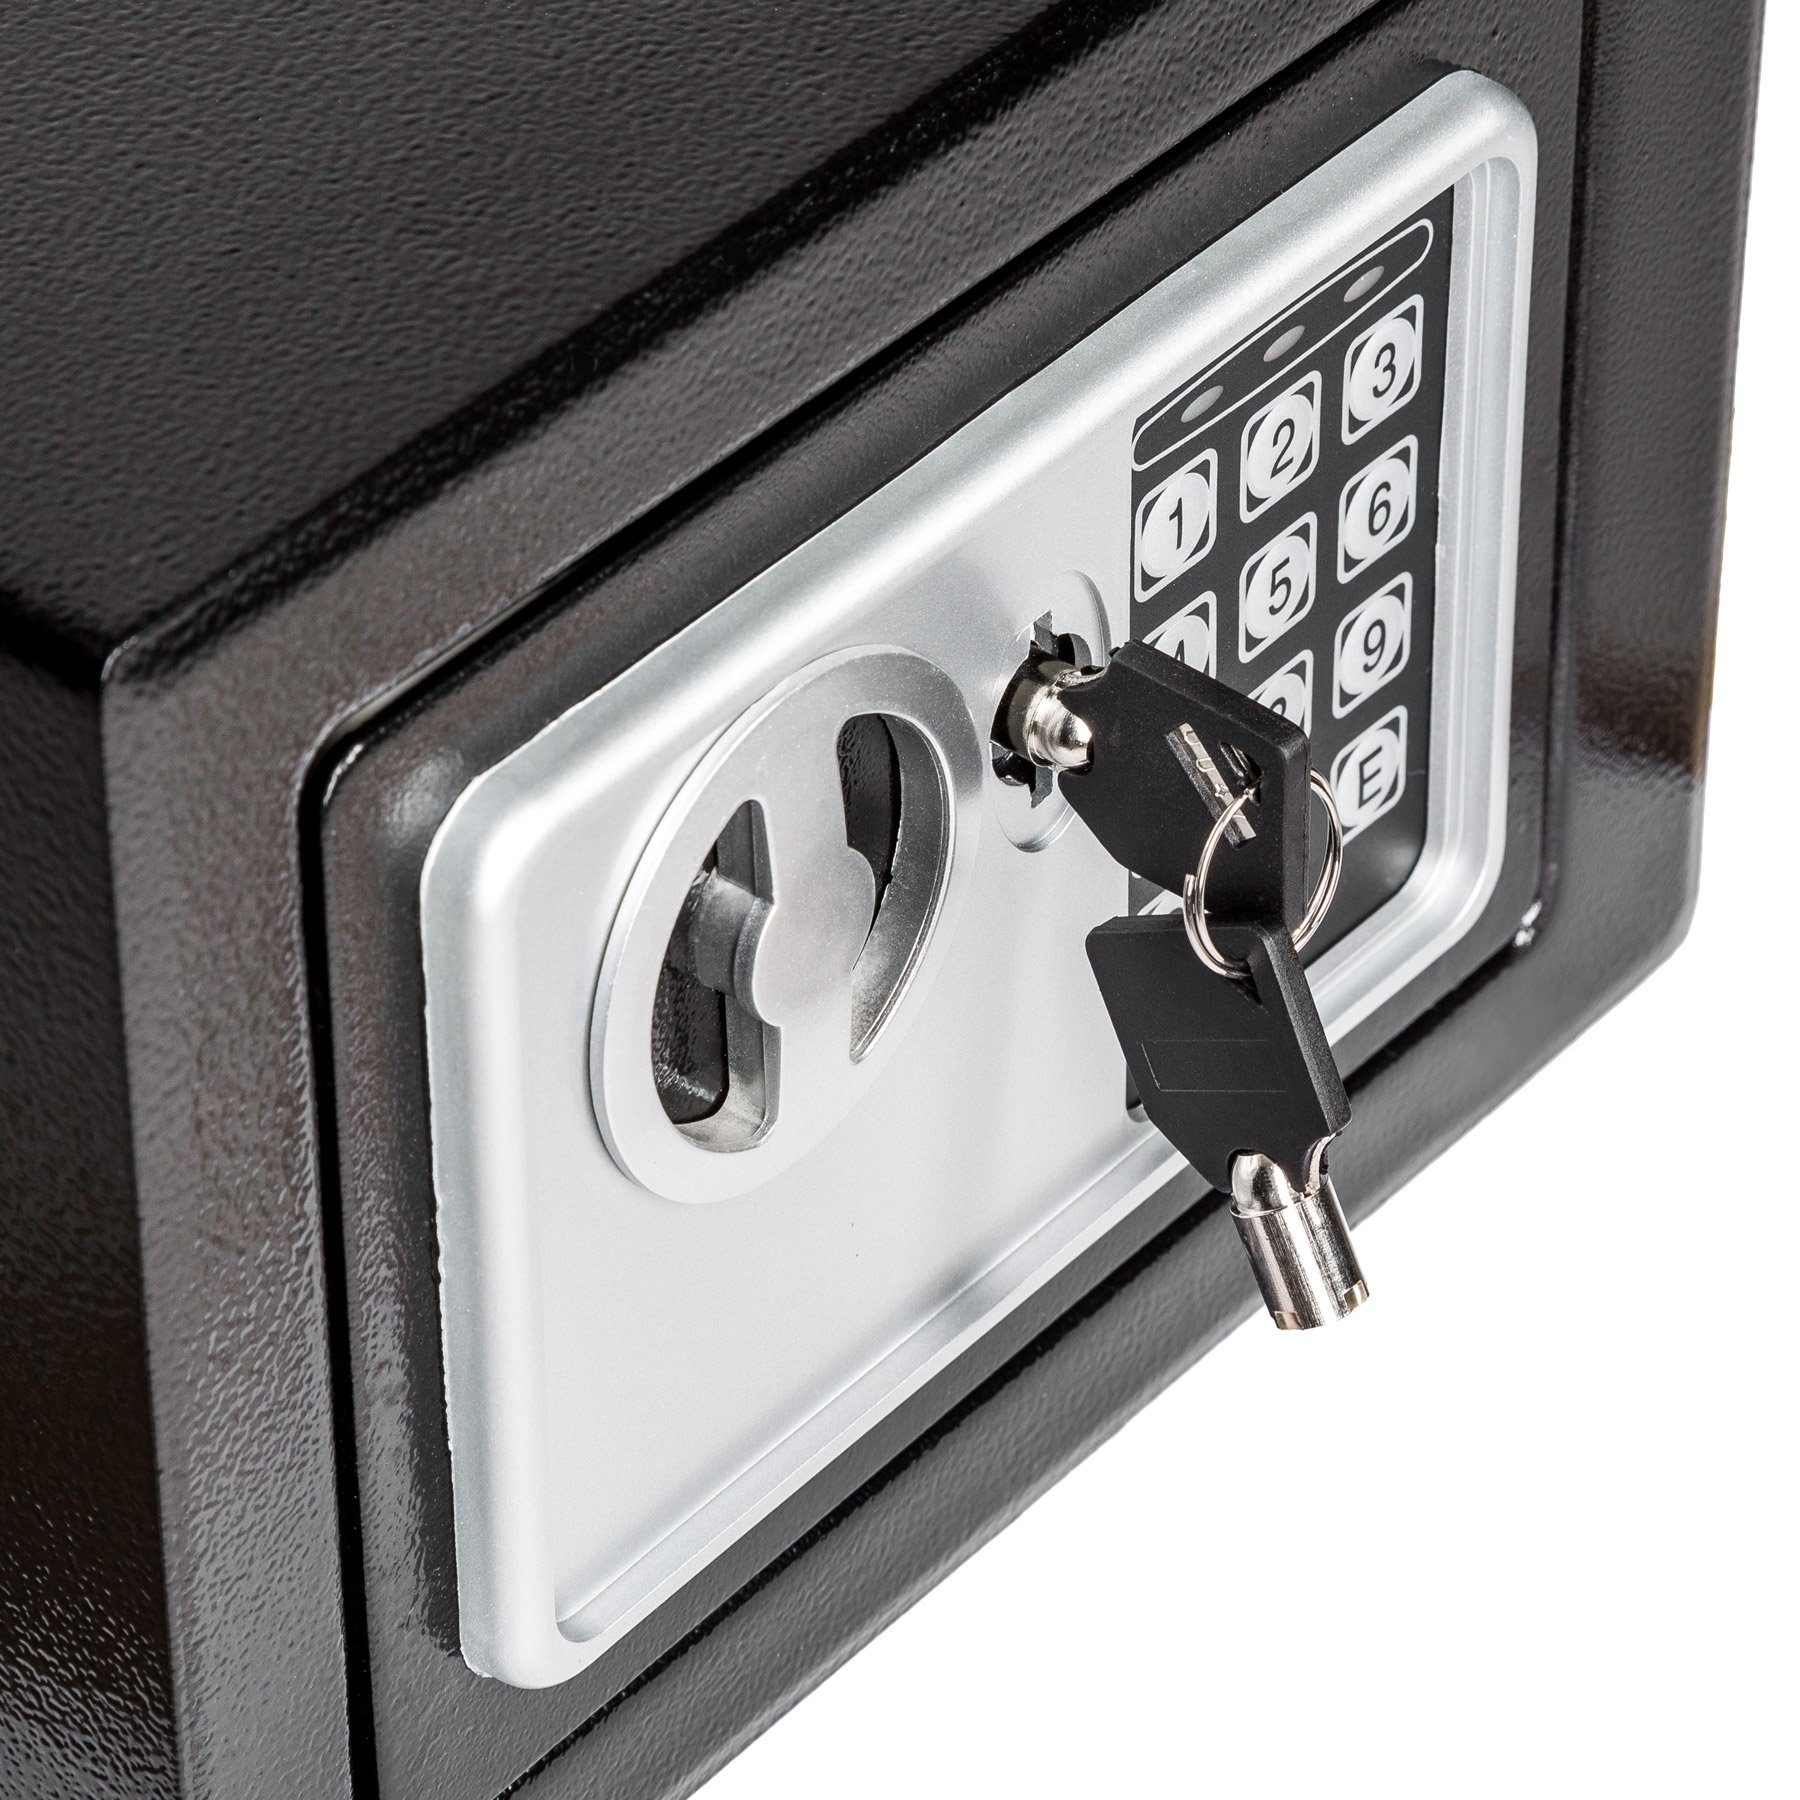 inkl., Tresor Schlüssel tectake mit Elektronischer Safe Tresor abschließbar